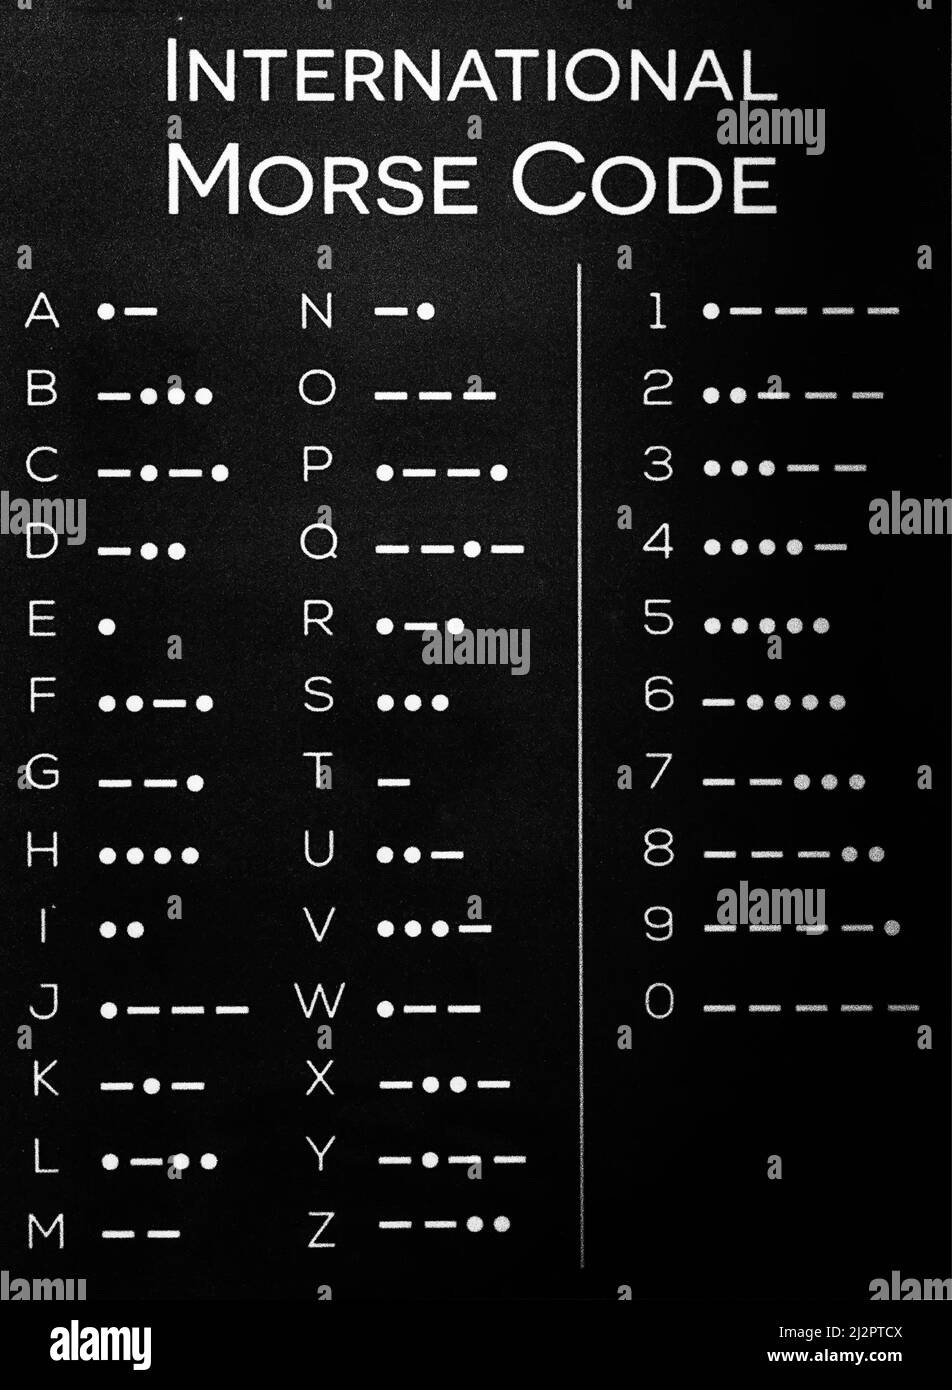 International Morse Code Table Stock Photo